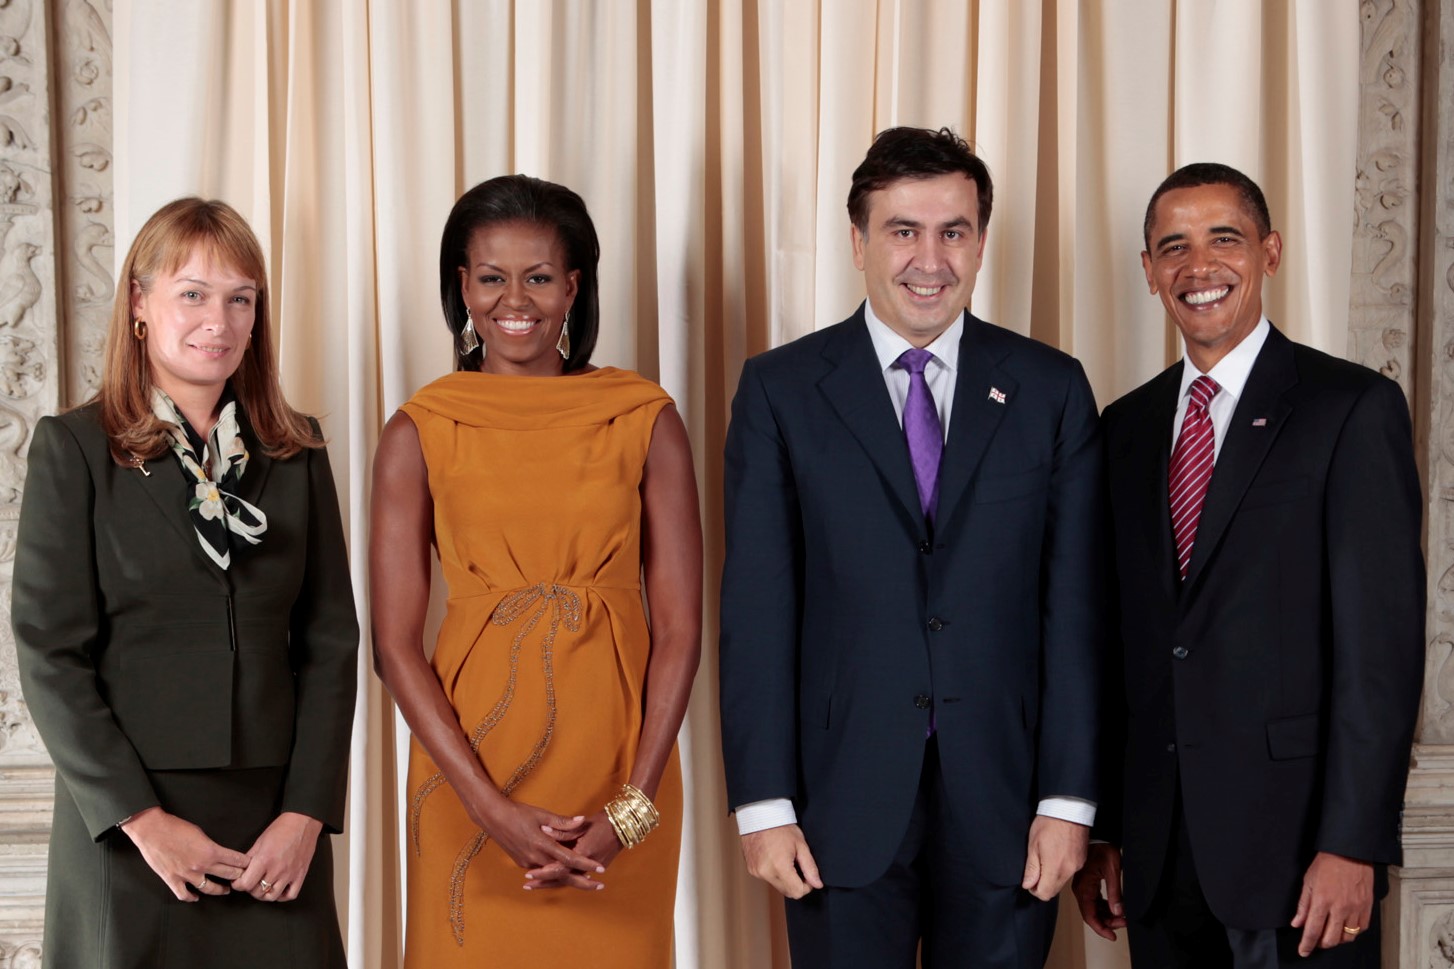 Mikheil Saakashvili with Obamas новости барак обама, Грузия-США, Михаил Саакашвили